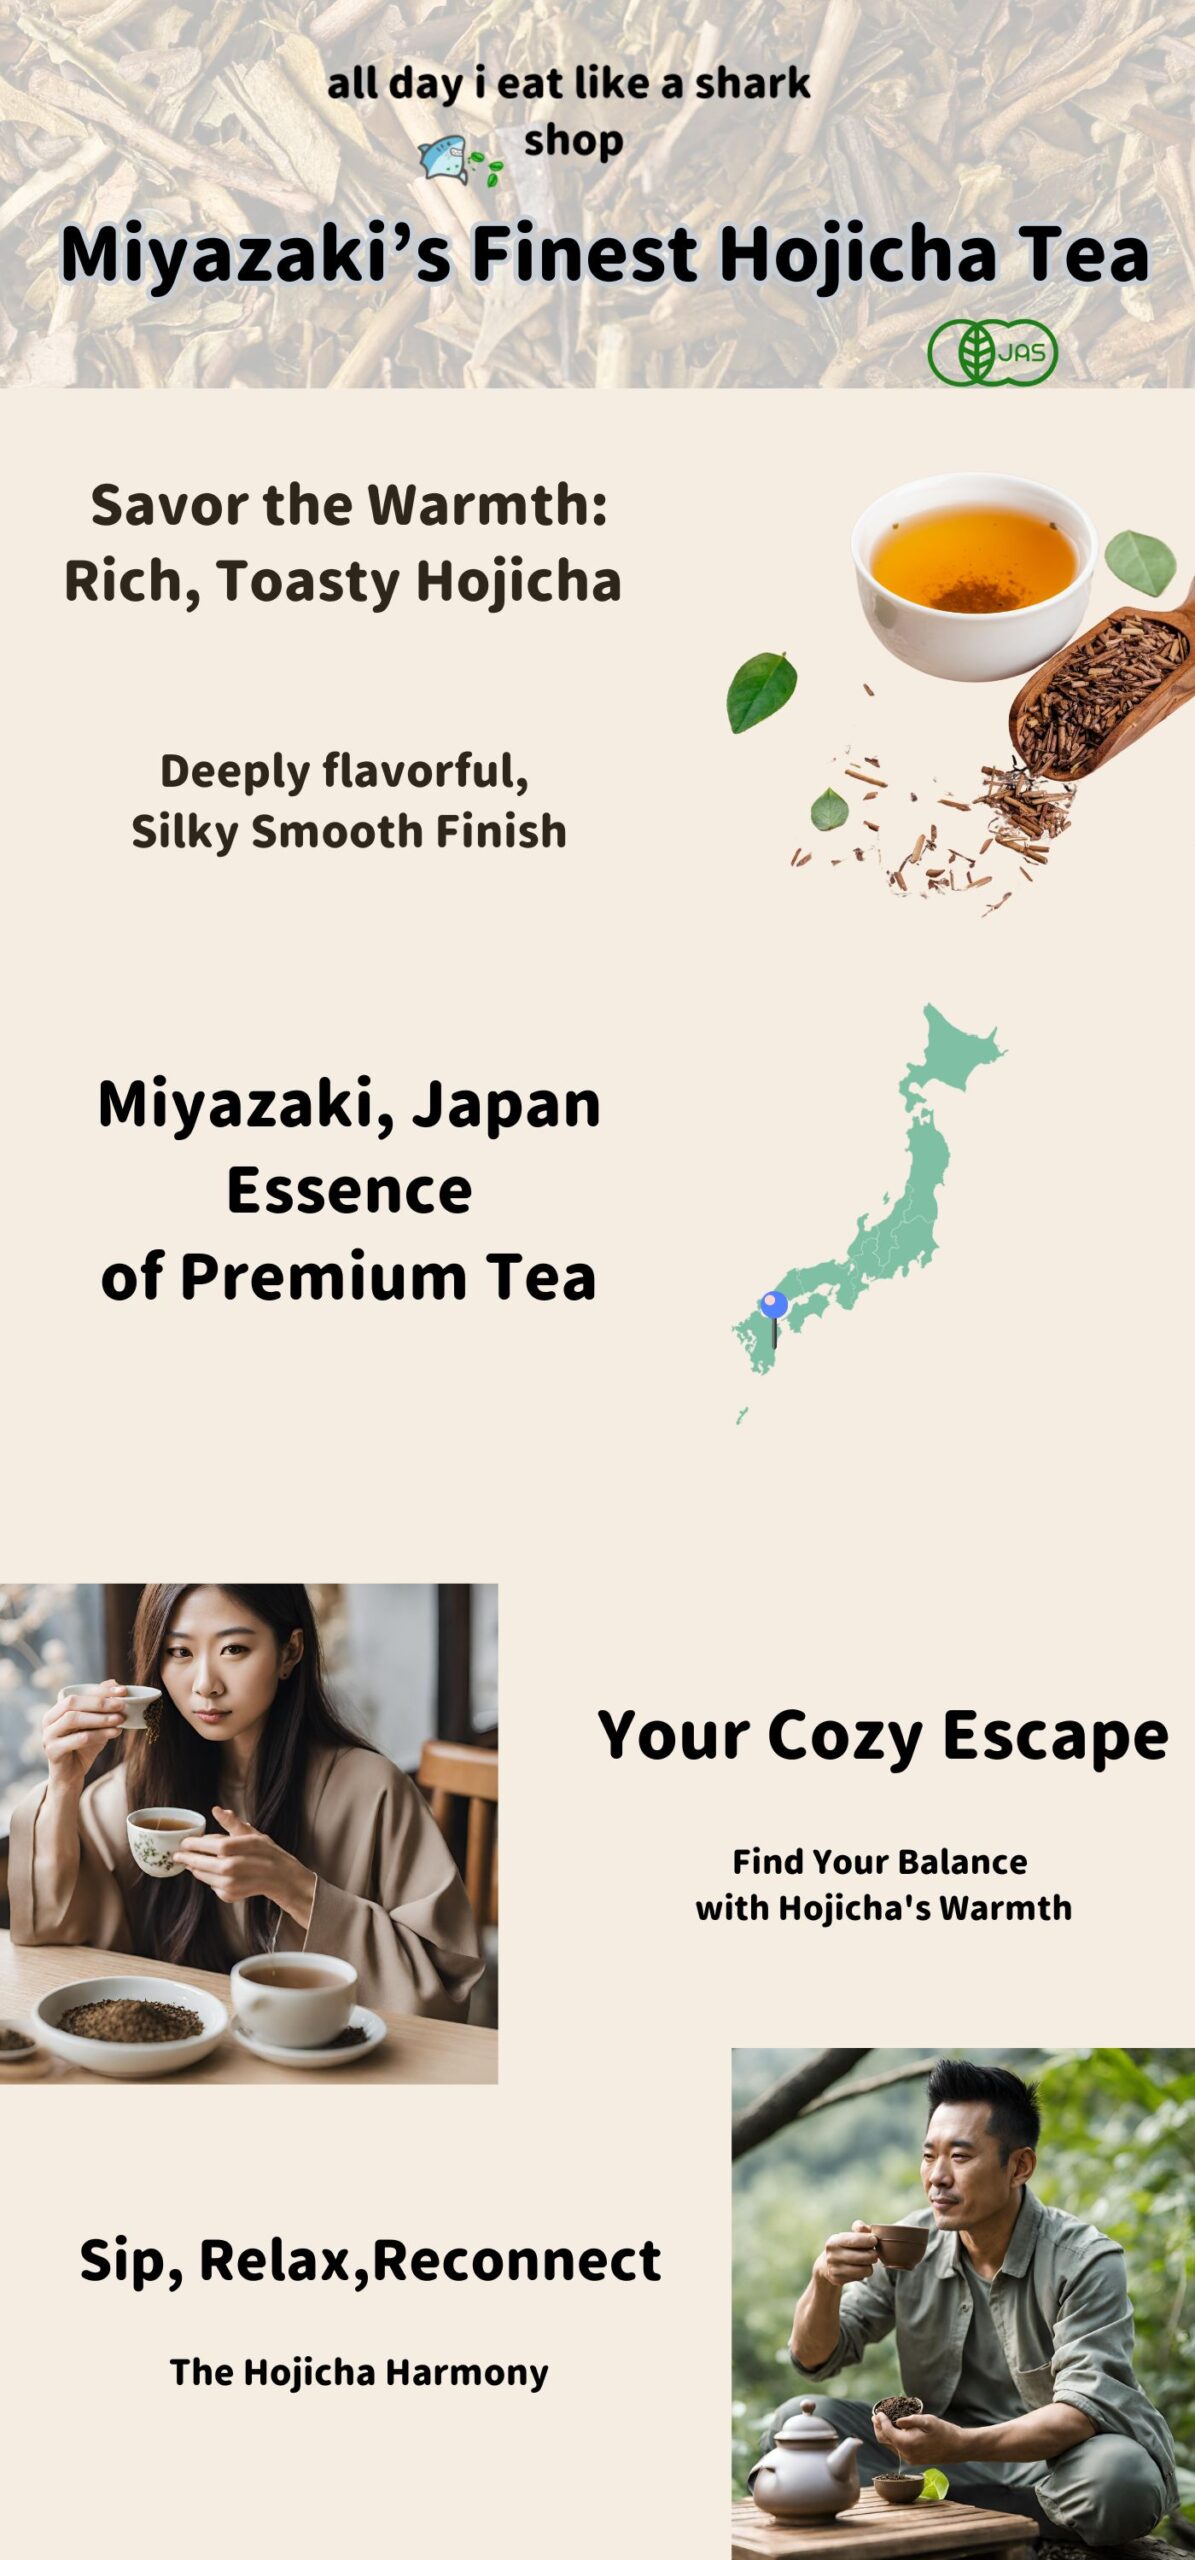 Miyazak’s Finest Hojicha Tea infographic